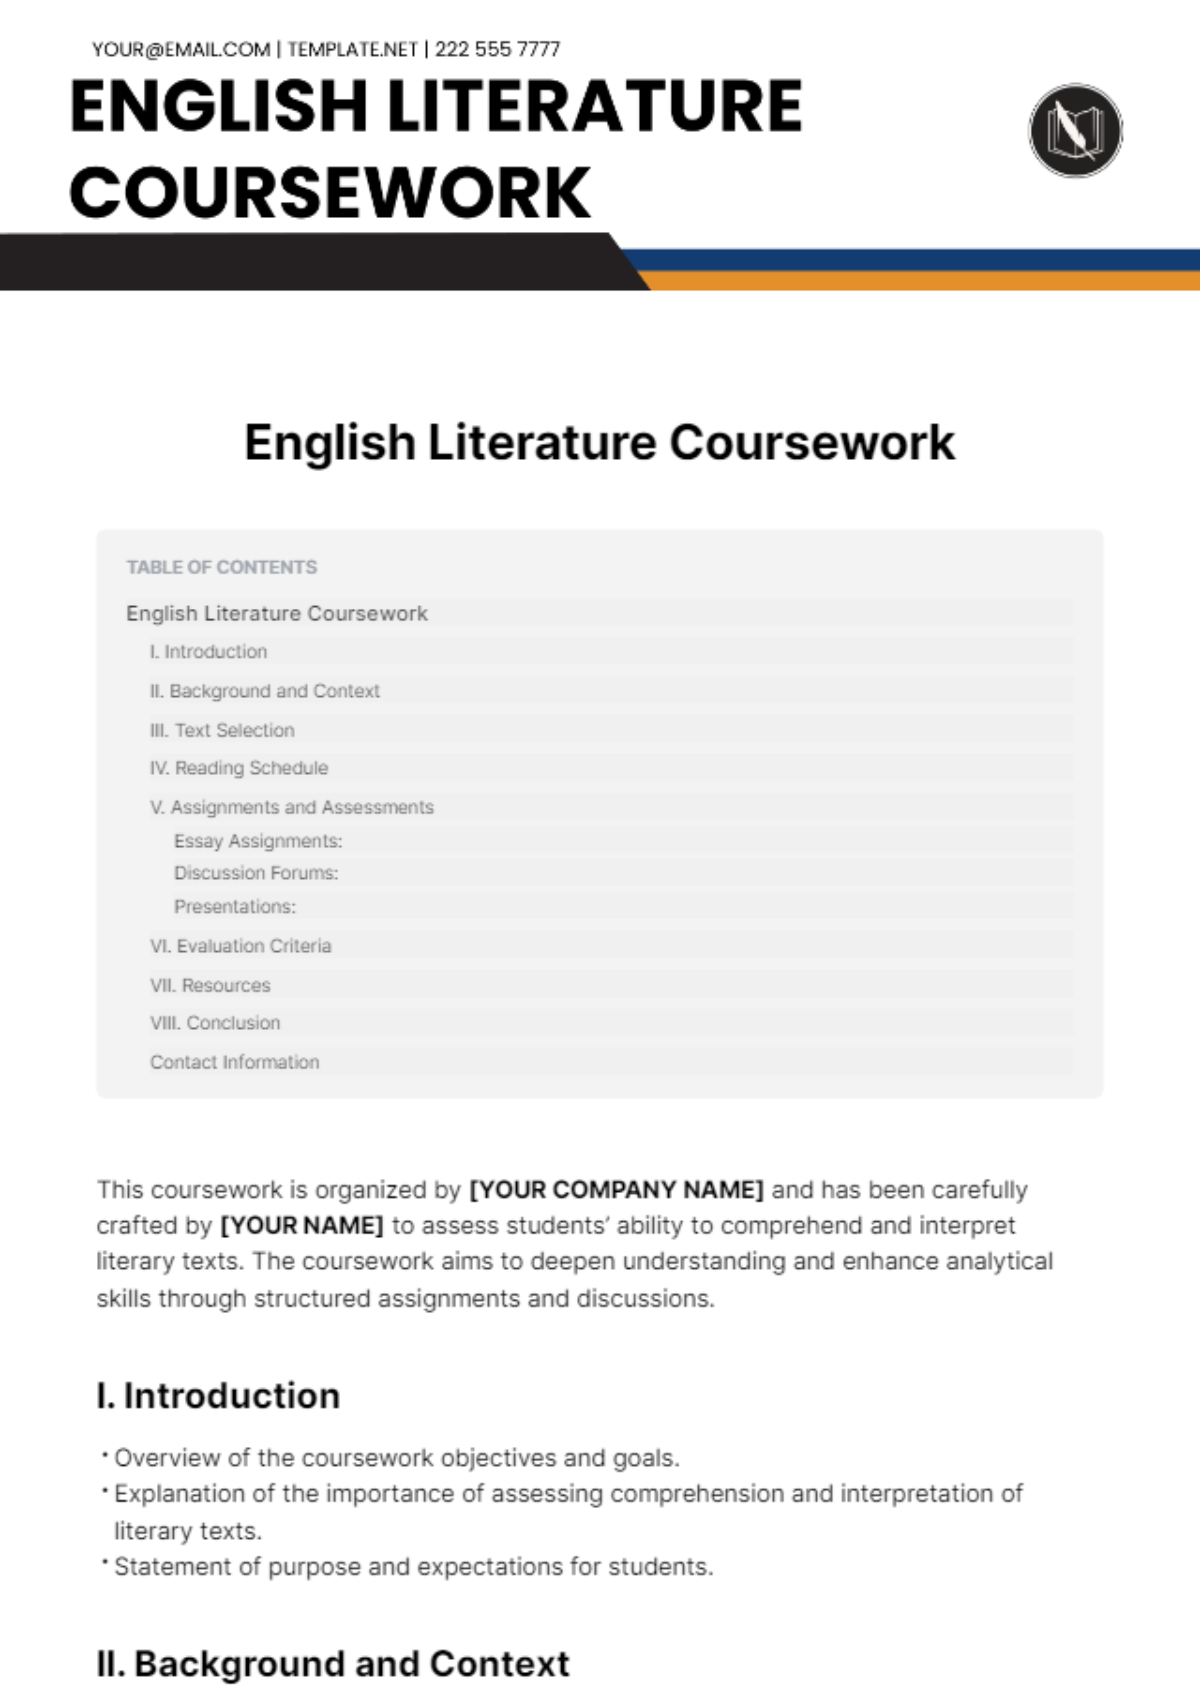 English Literature Coursework Template